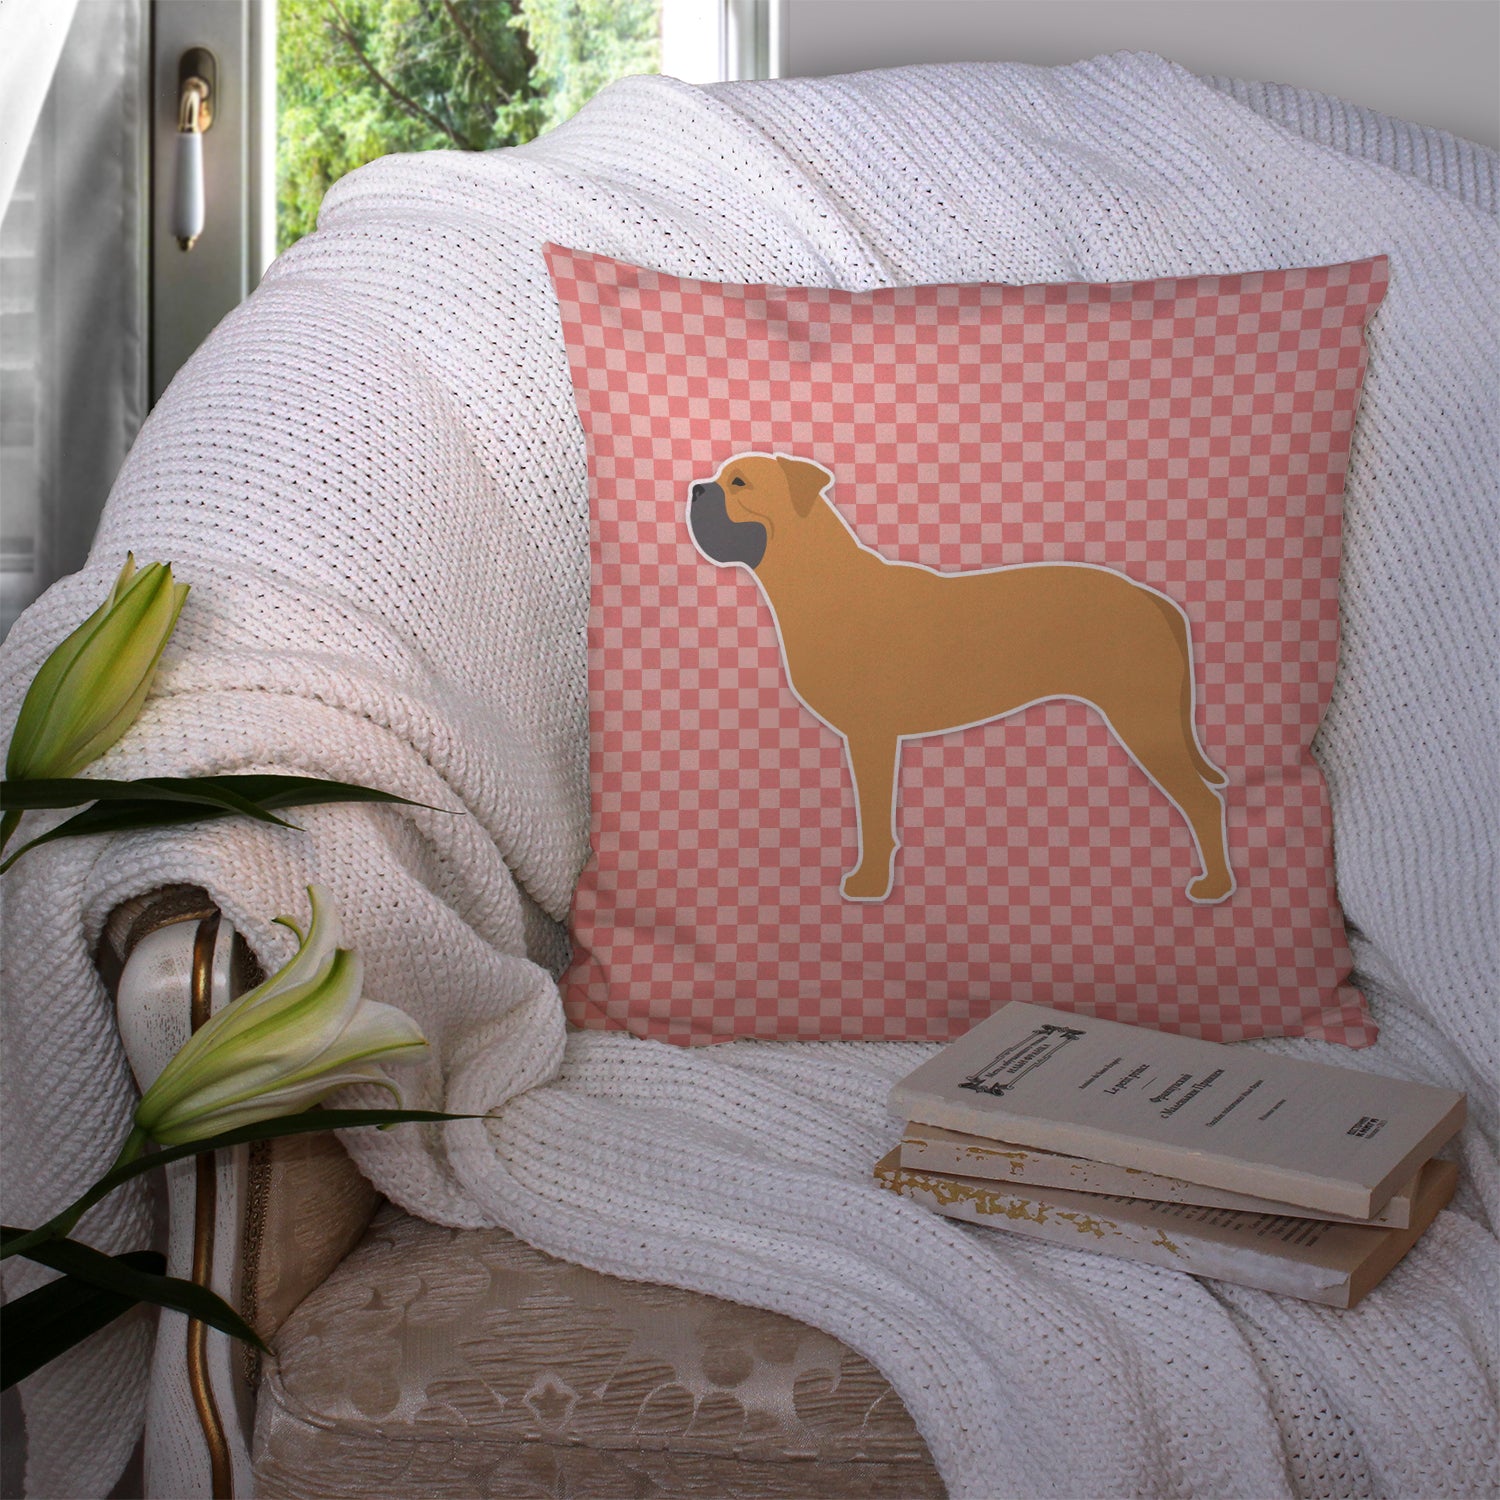 Bullmastiff Checkerboard Pink Fabric Decorative Pillow BB3671PW1414 - the-store.com